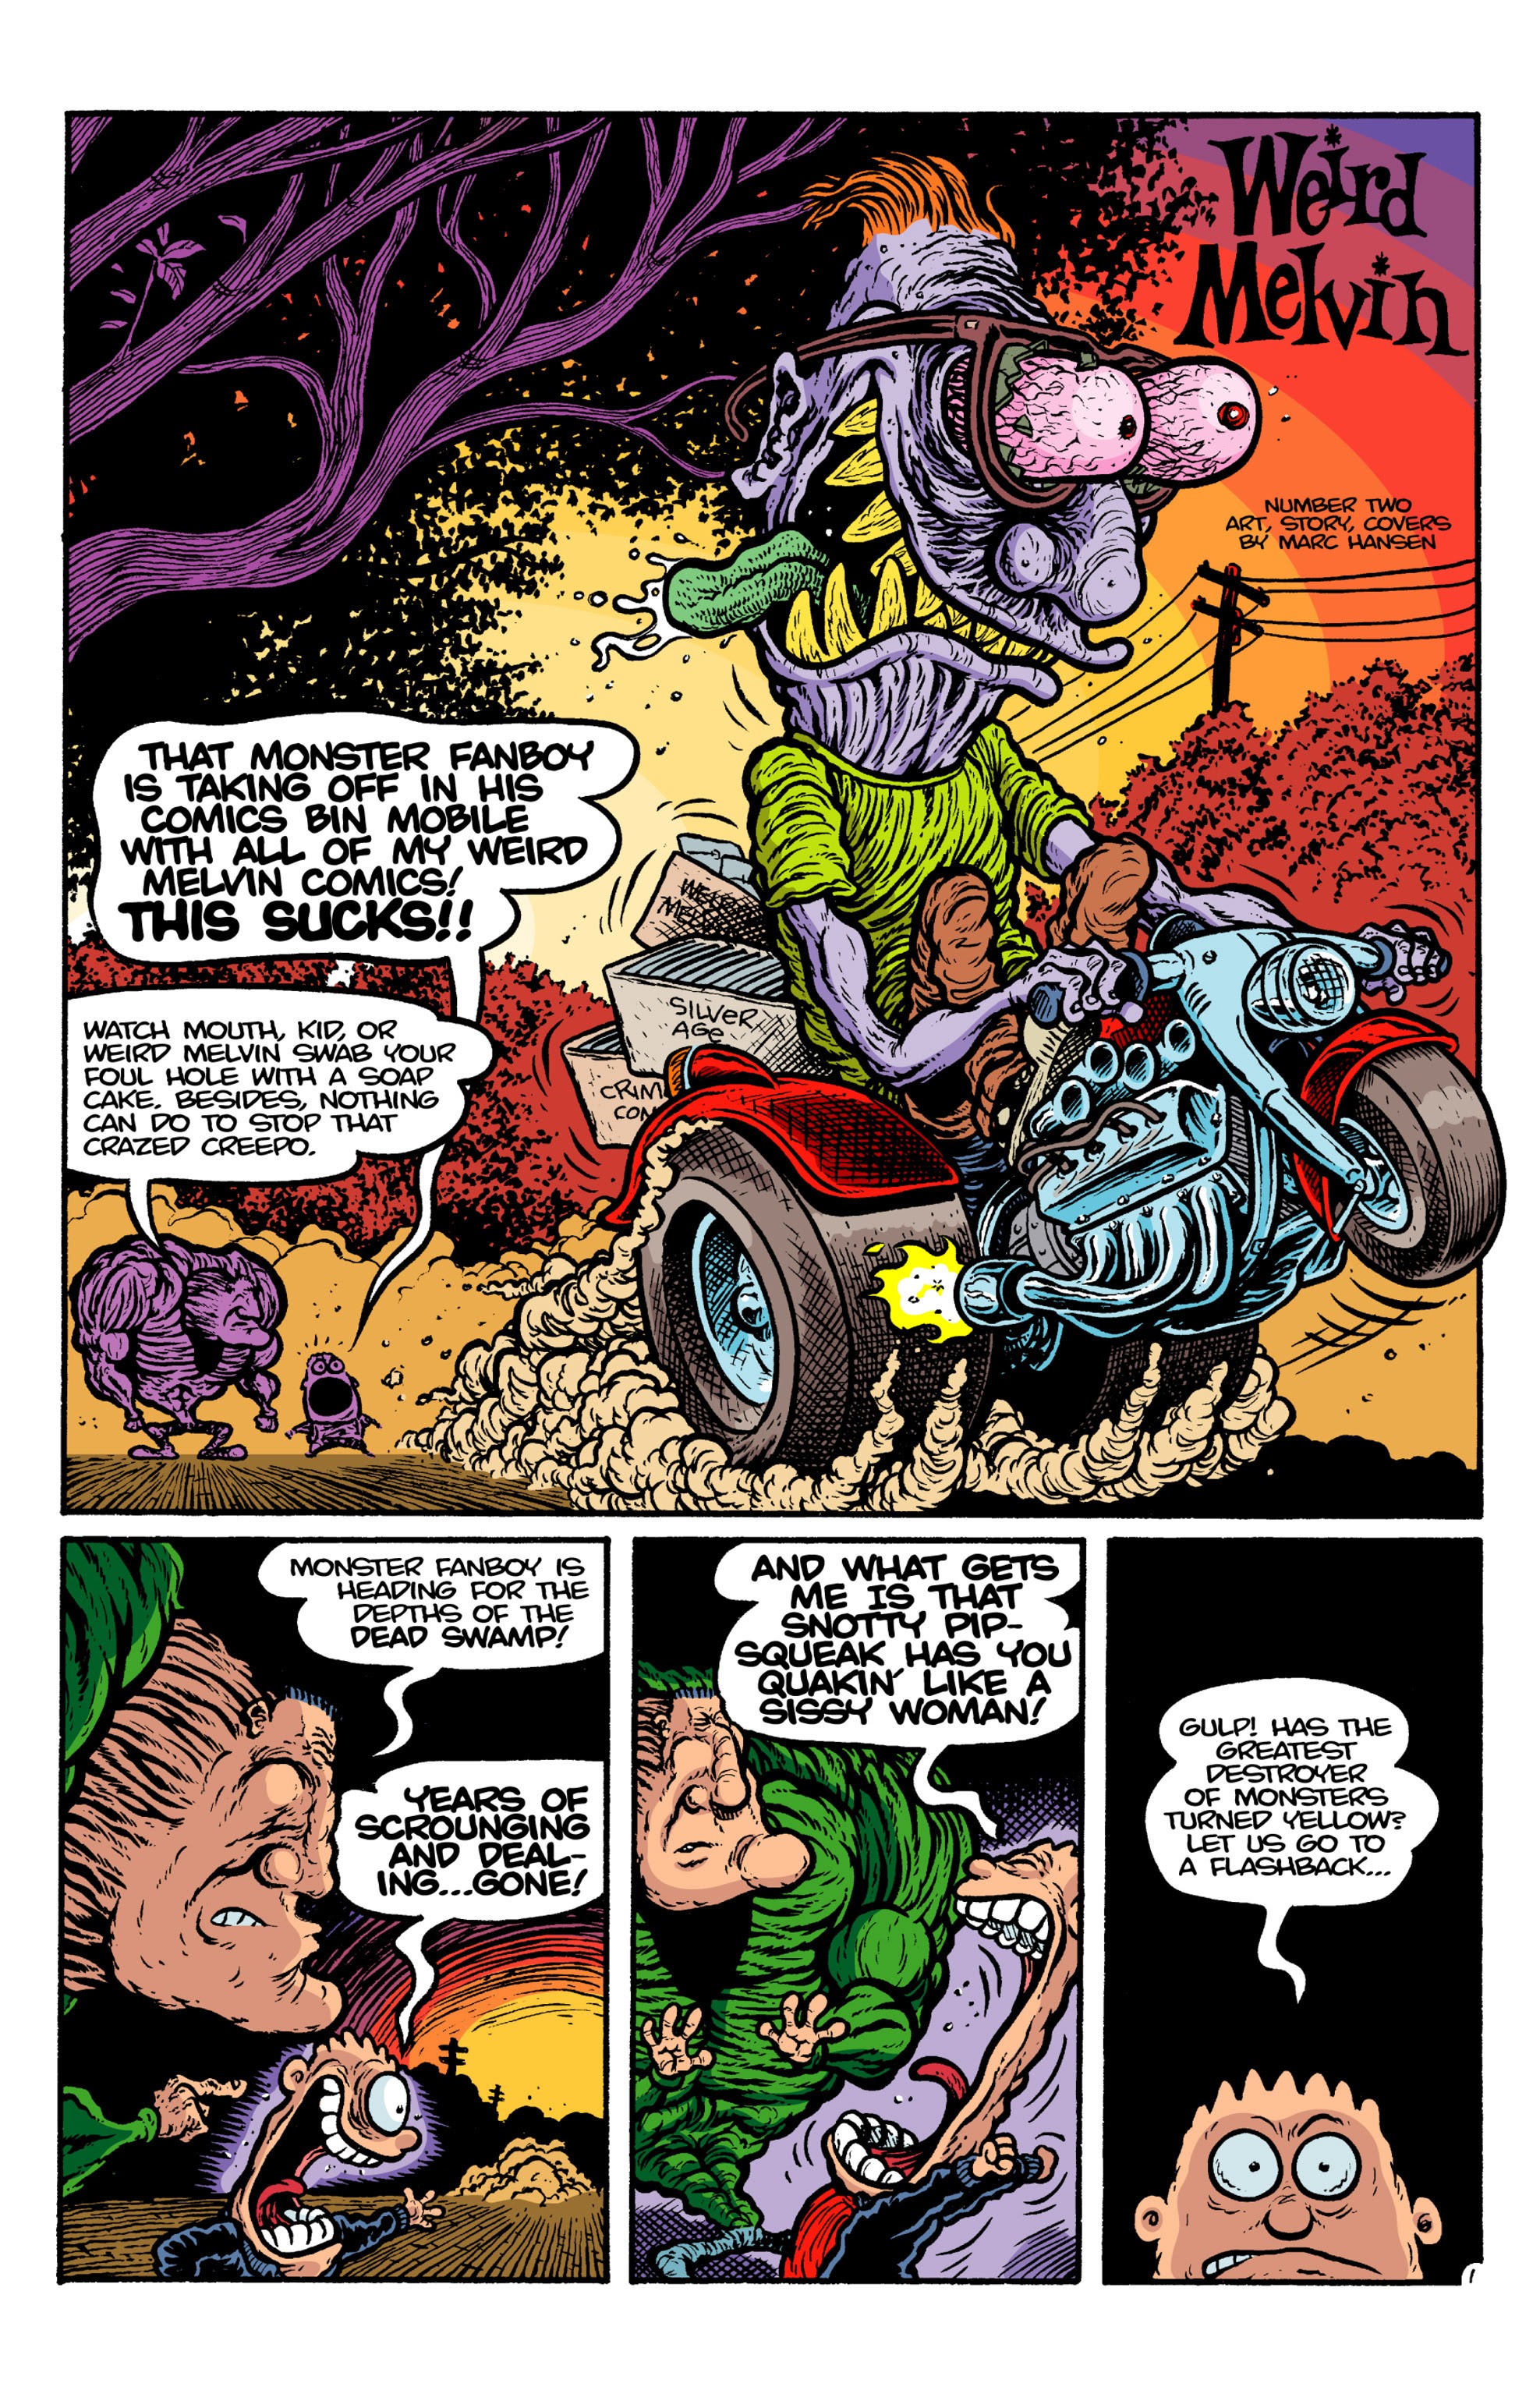 Read online Weird Melvin comic -  Issue #2 - 3